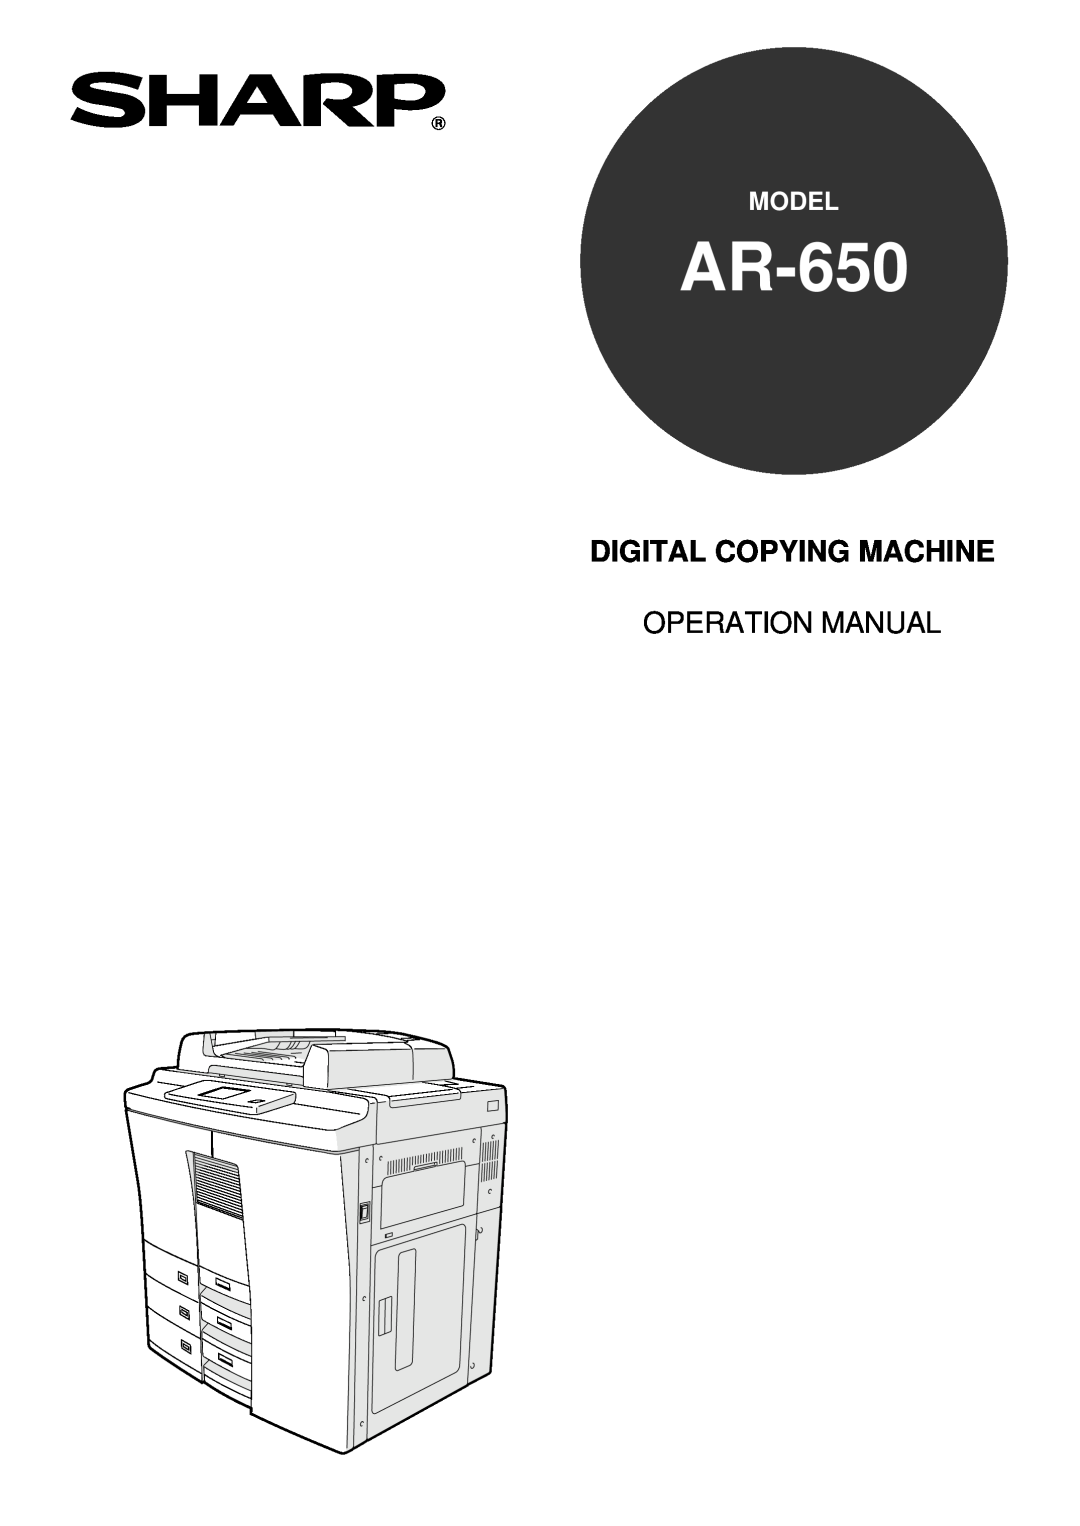 Sharp AR-650 operation manual Digital Copying Machine, Operation Manual, Model 